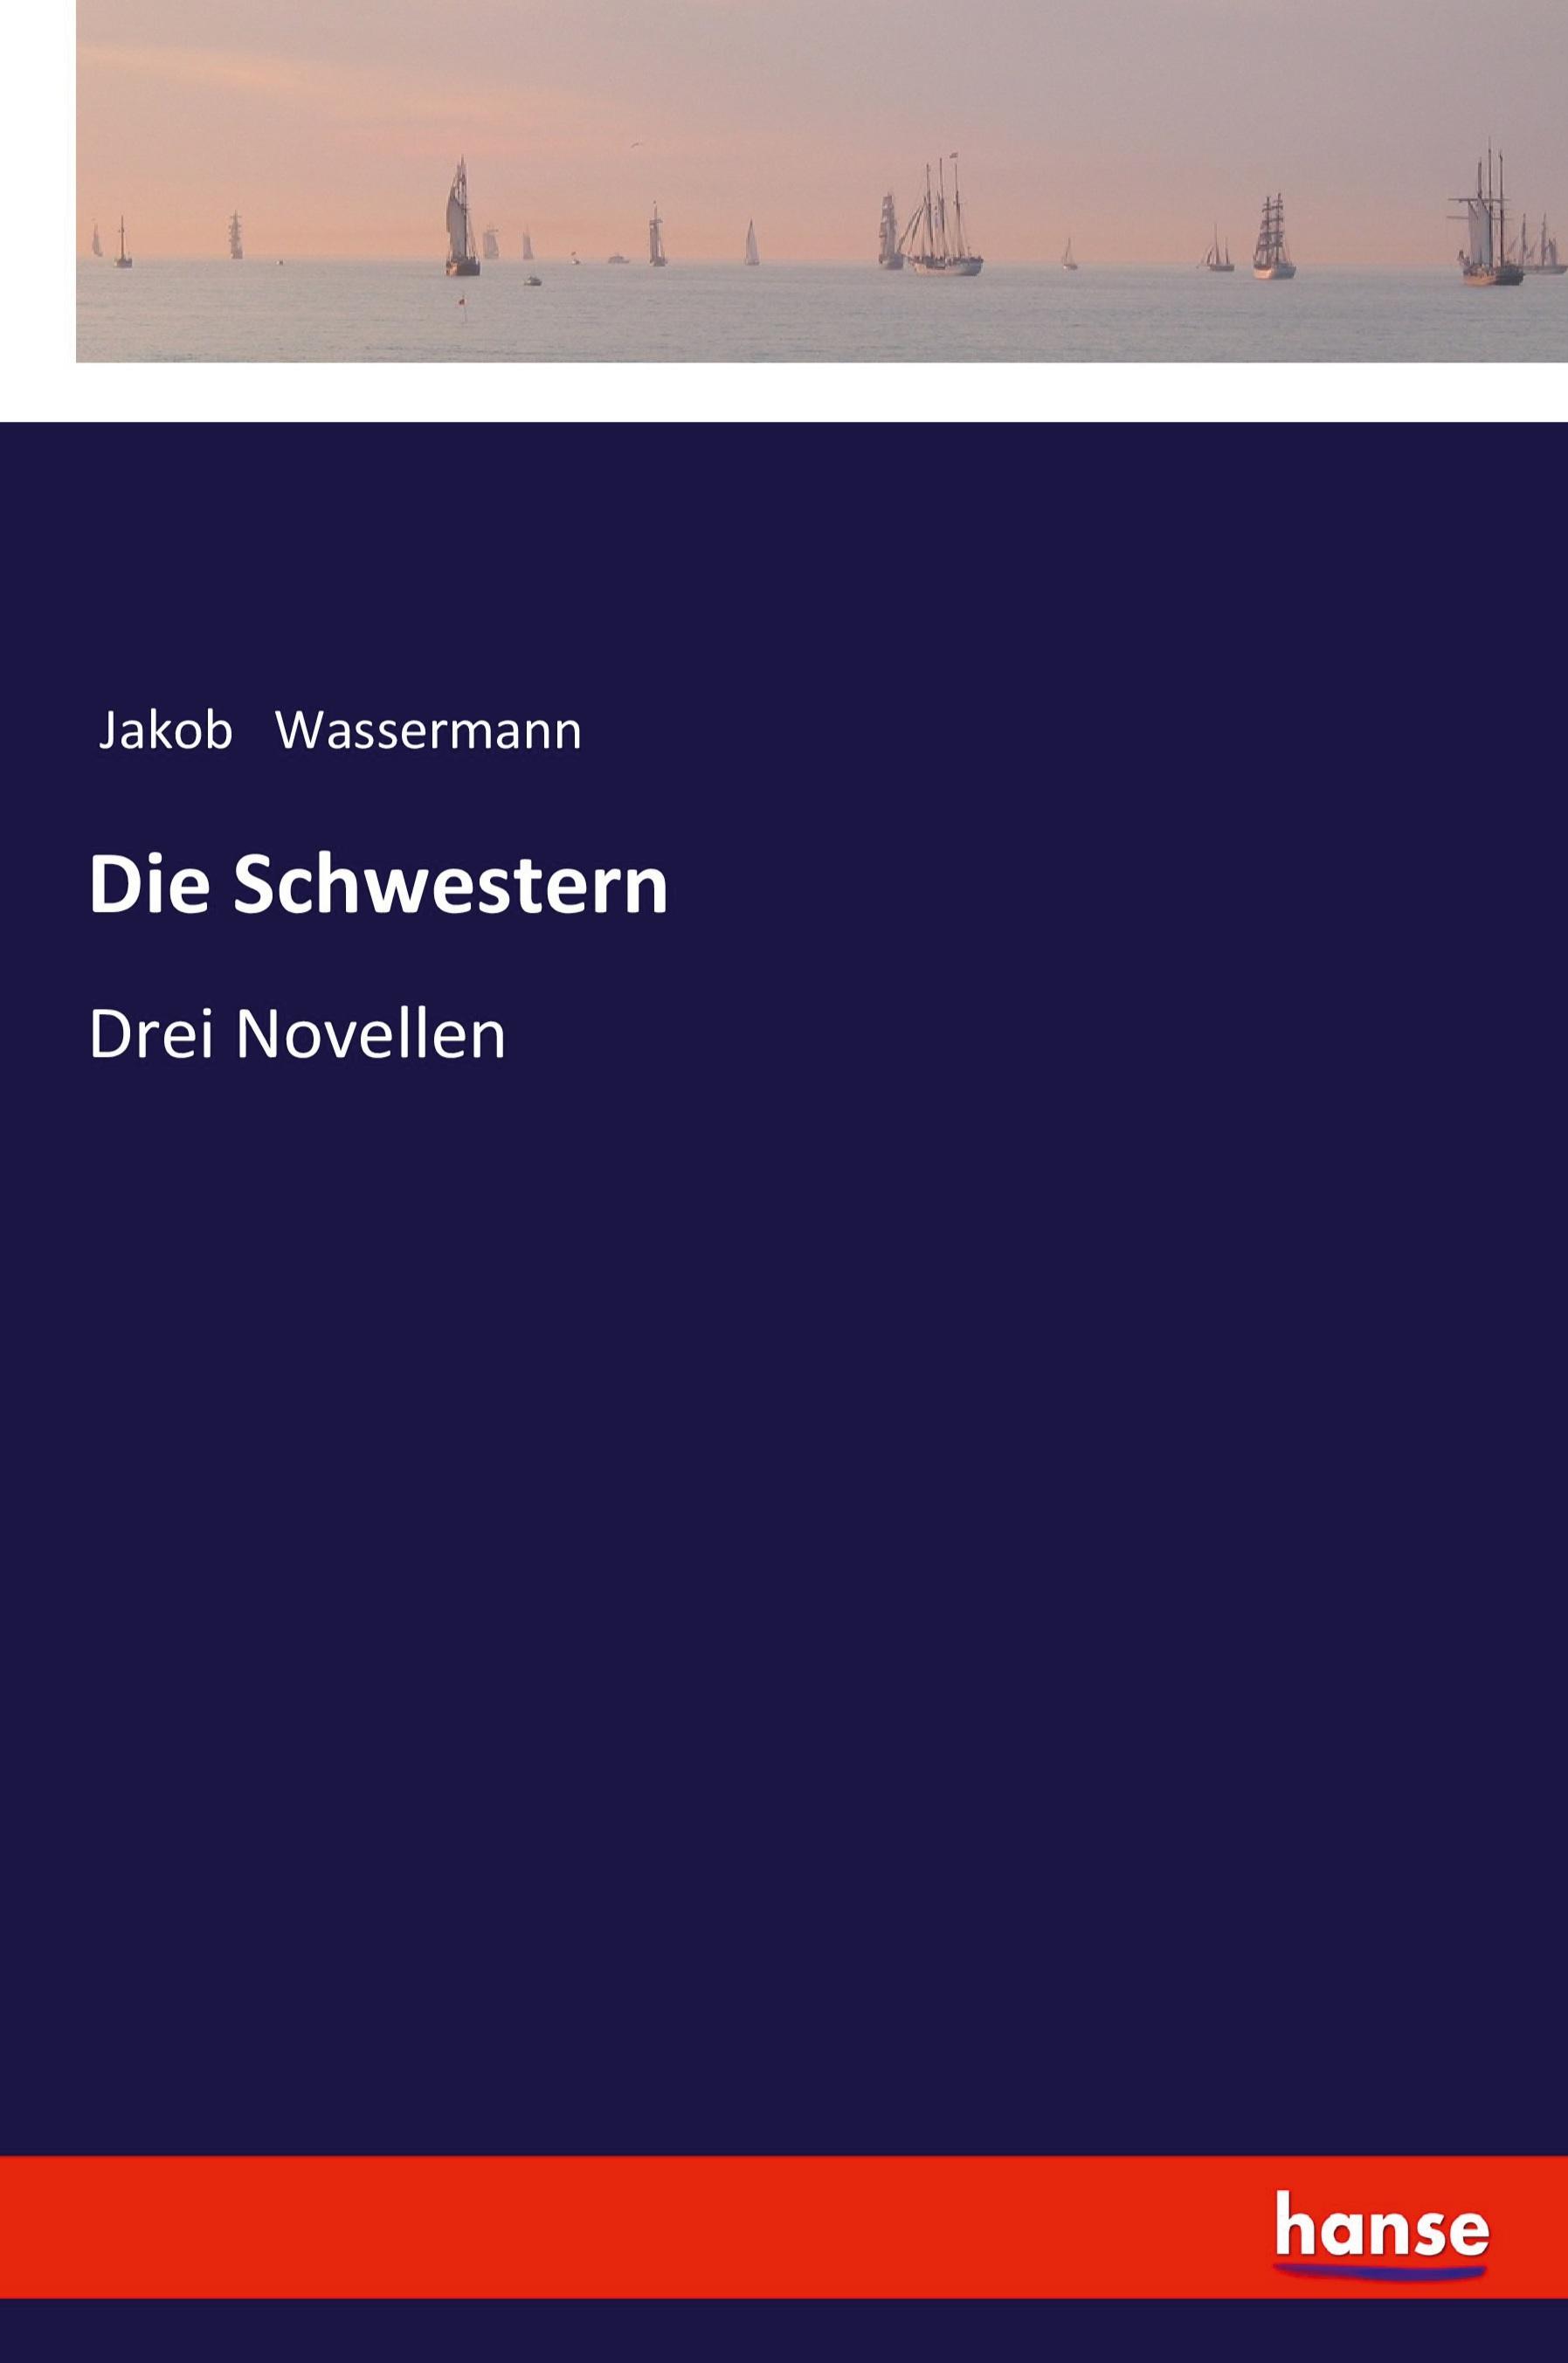 Die Schwestern | Drei Novellen | Jakob Wassermann | Taschenbuch | Paperback | 148 S. | Deutsch | 2020 | hansebooks | EAN 9783337355425 - Wassermann, Jakob